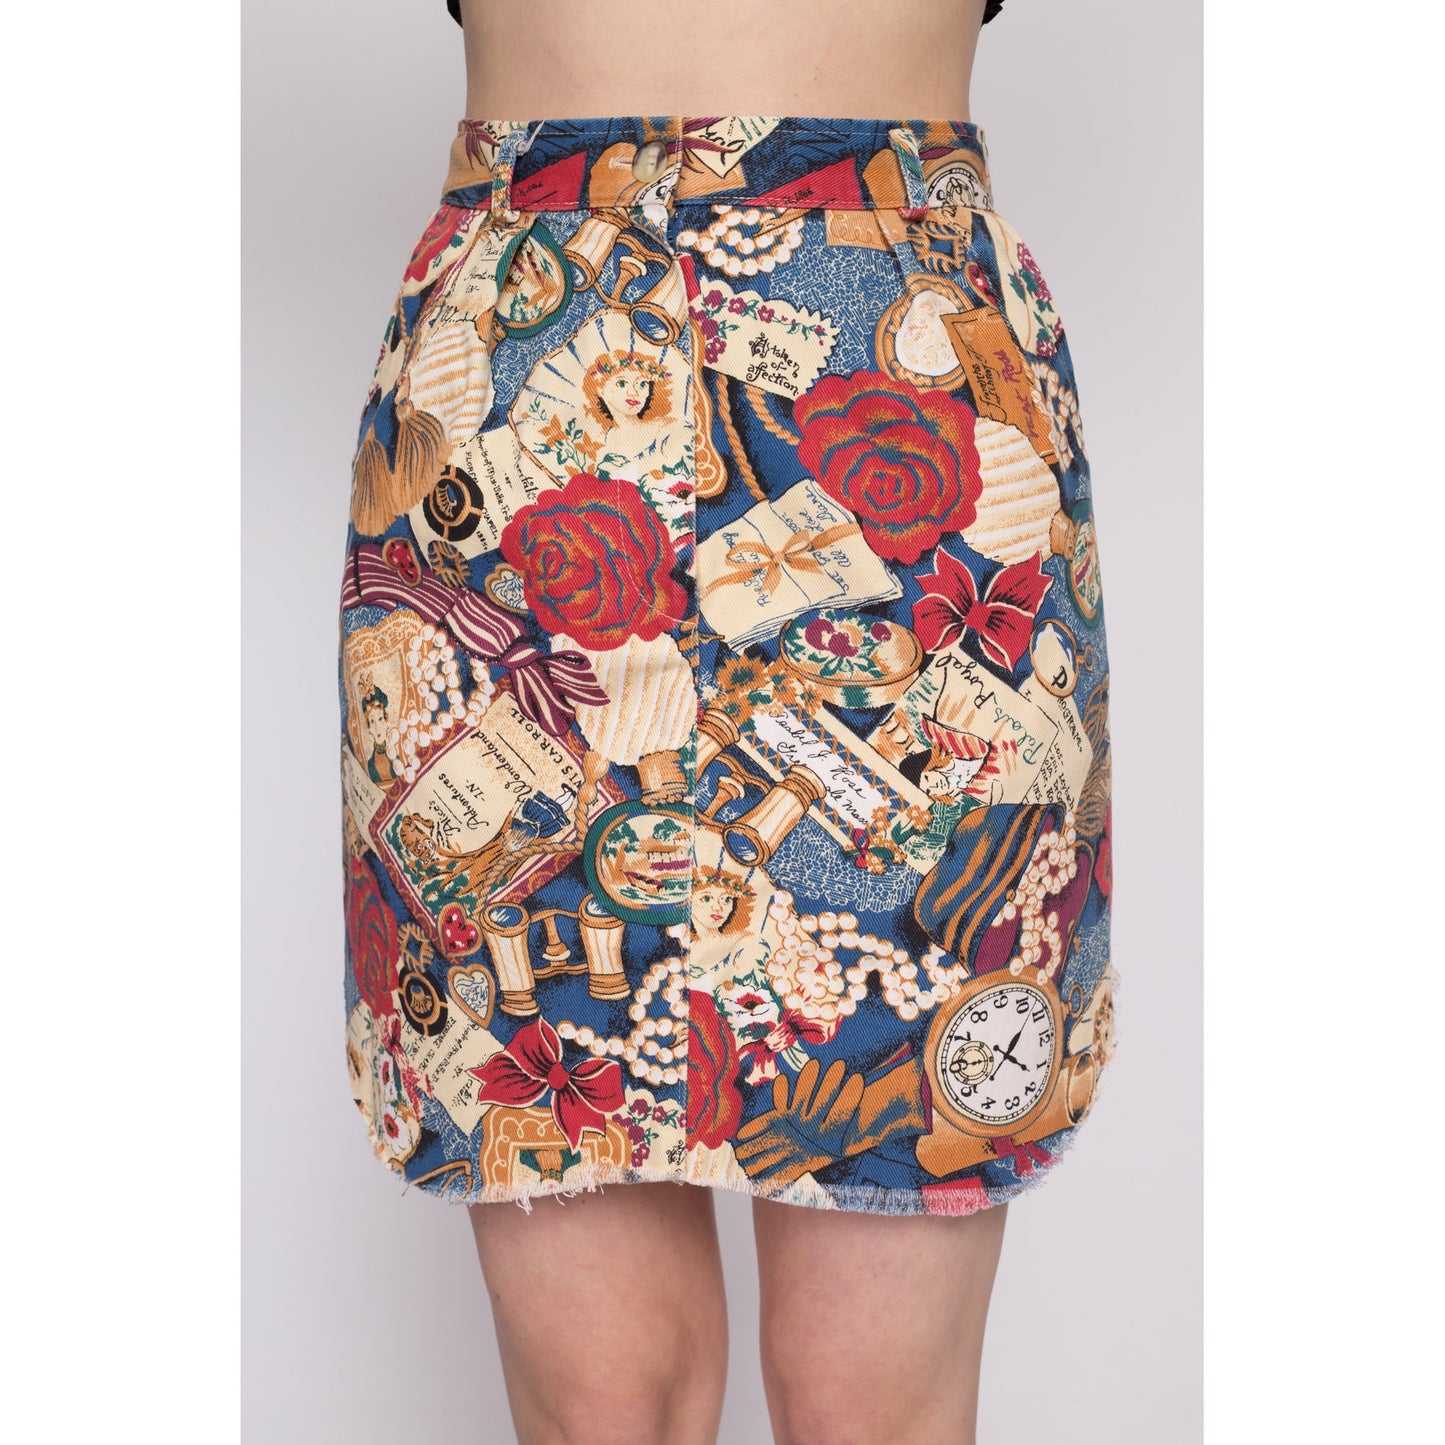 S| 80s Victorian Alice In Wonderland Print Denim Mini Skirt - Small, 27" | Vintage Boho High Waisted Novelty Cutoff Jean Skirt